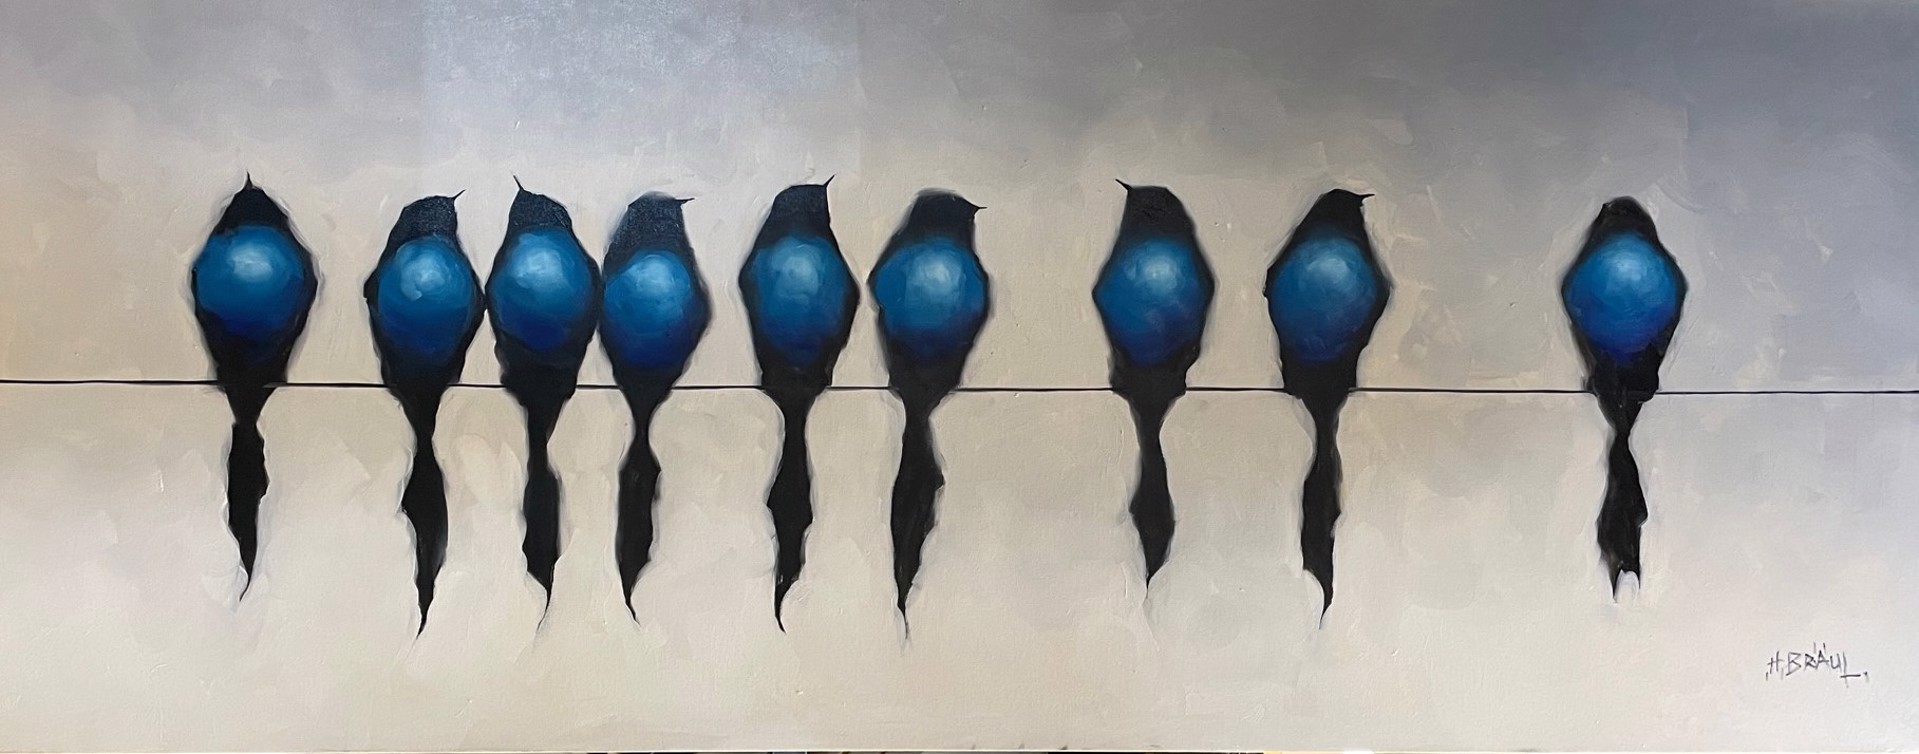 Blue Birds on Line by Harold Braul